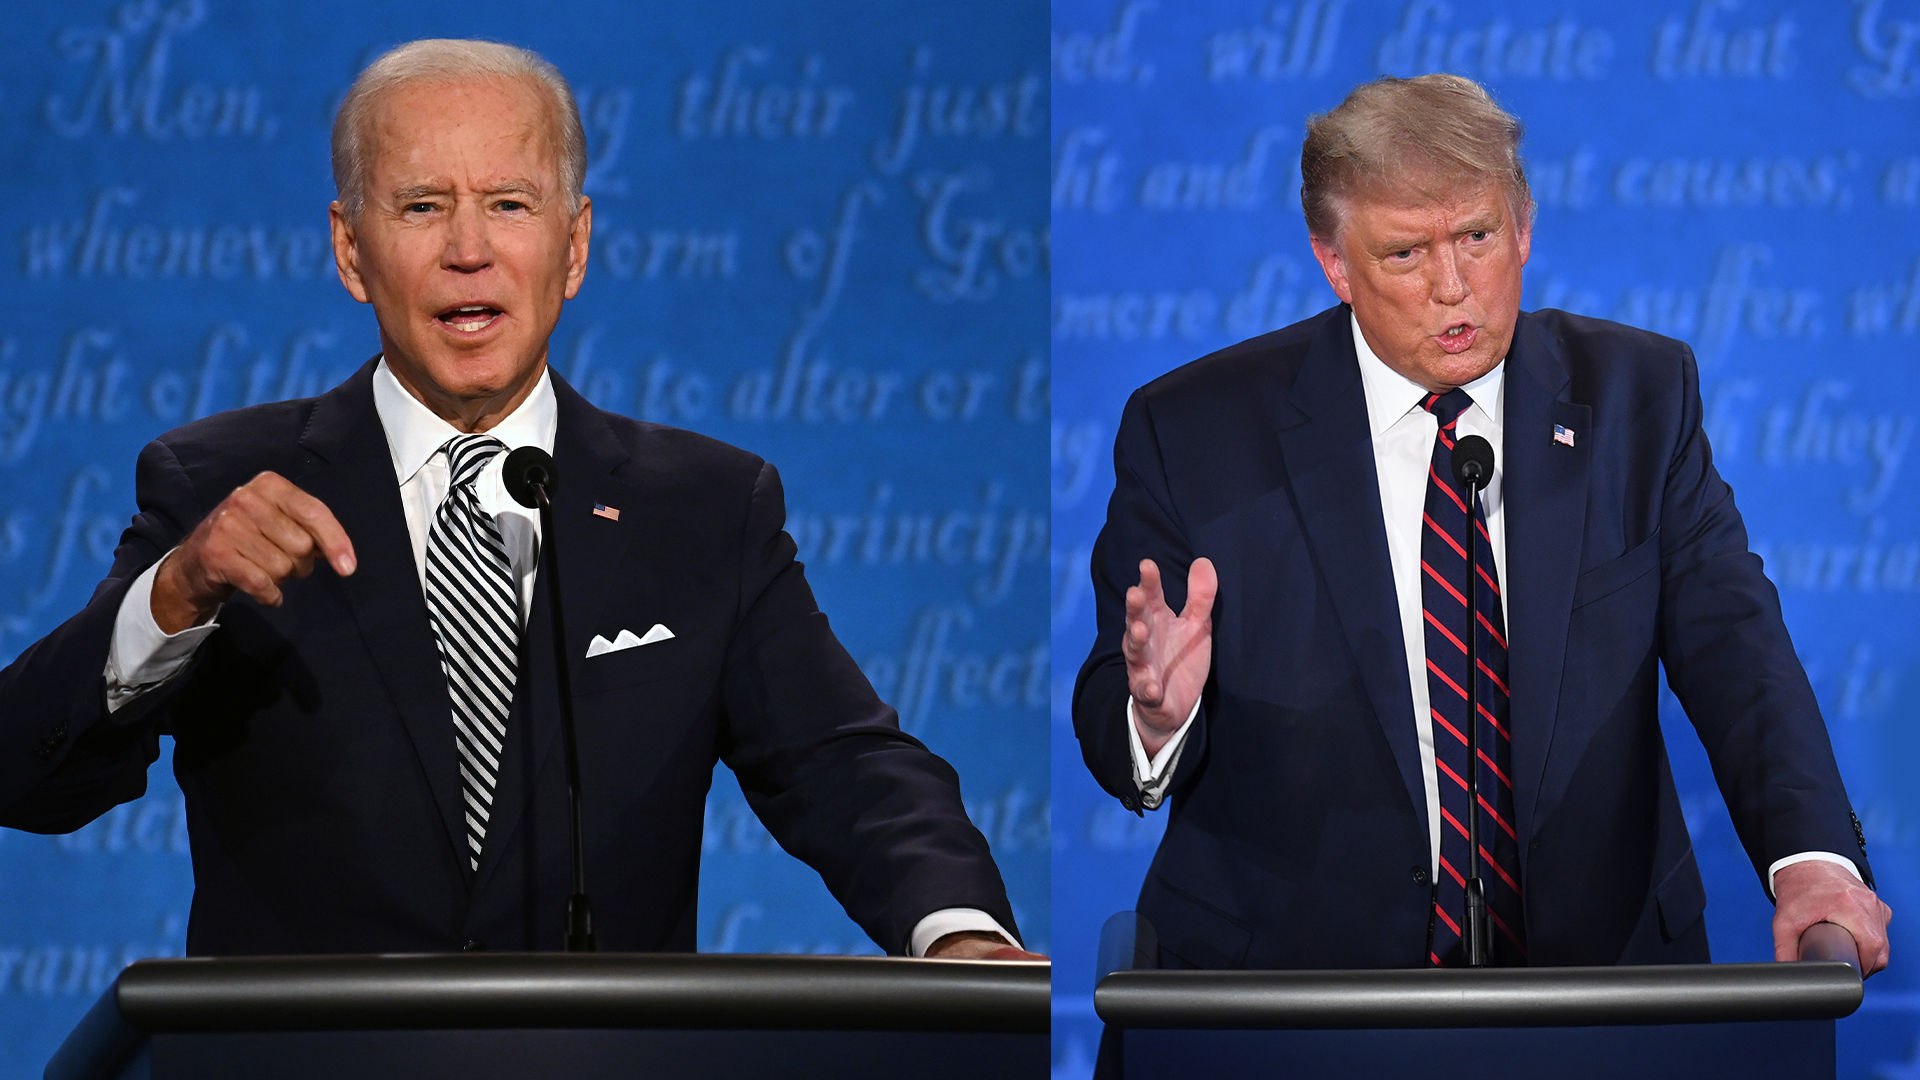 Donald Trump, Joe Biden trade heated barbs in first US presidential debate